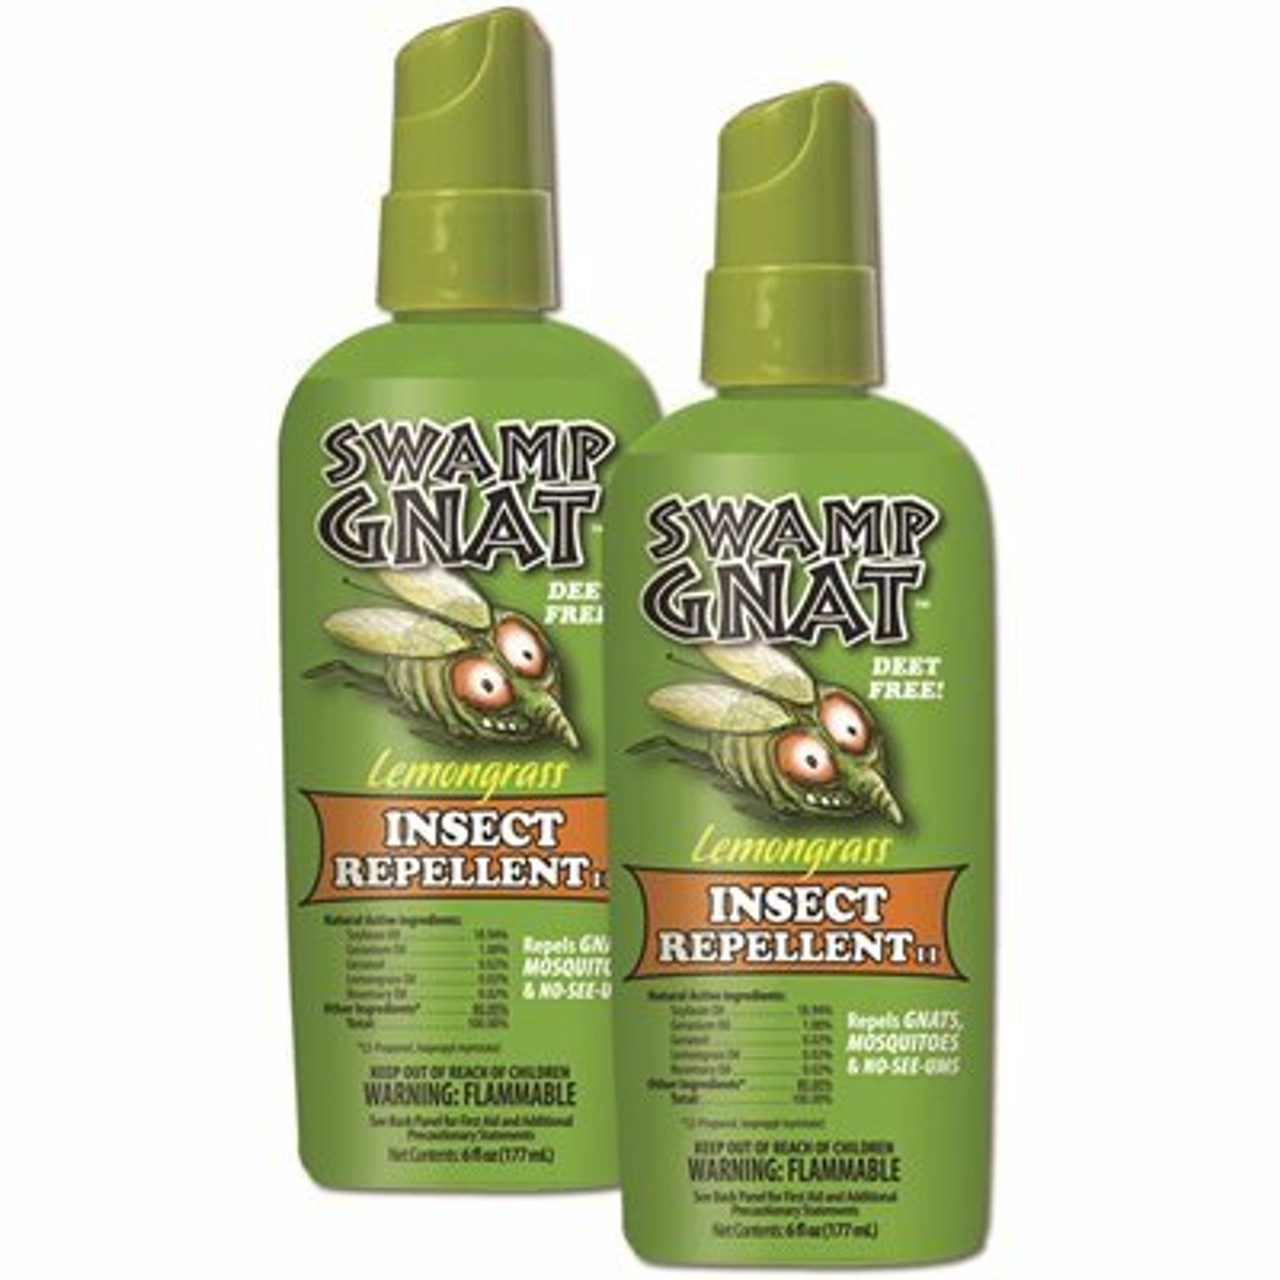 Harris 6 Oz. Swamp Gnat Insect Repellent (2-Pack)